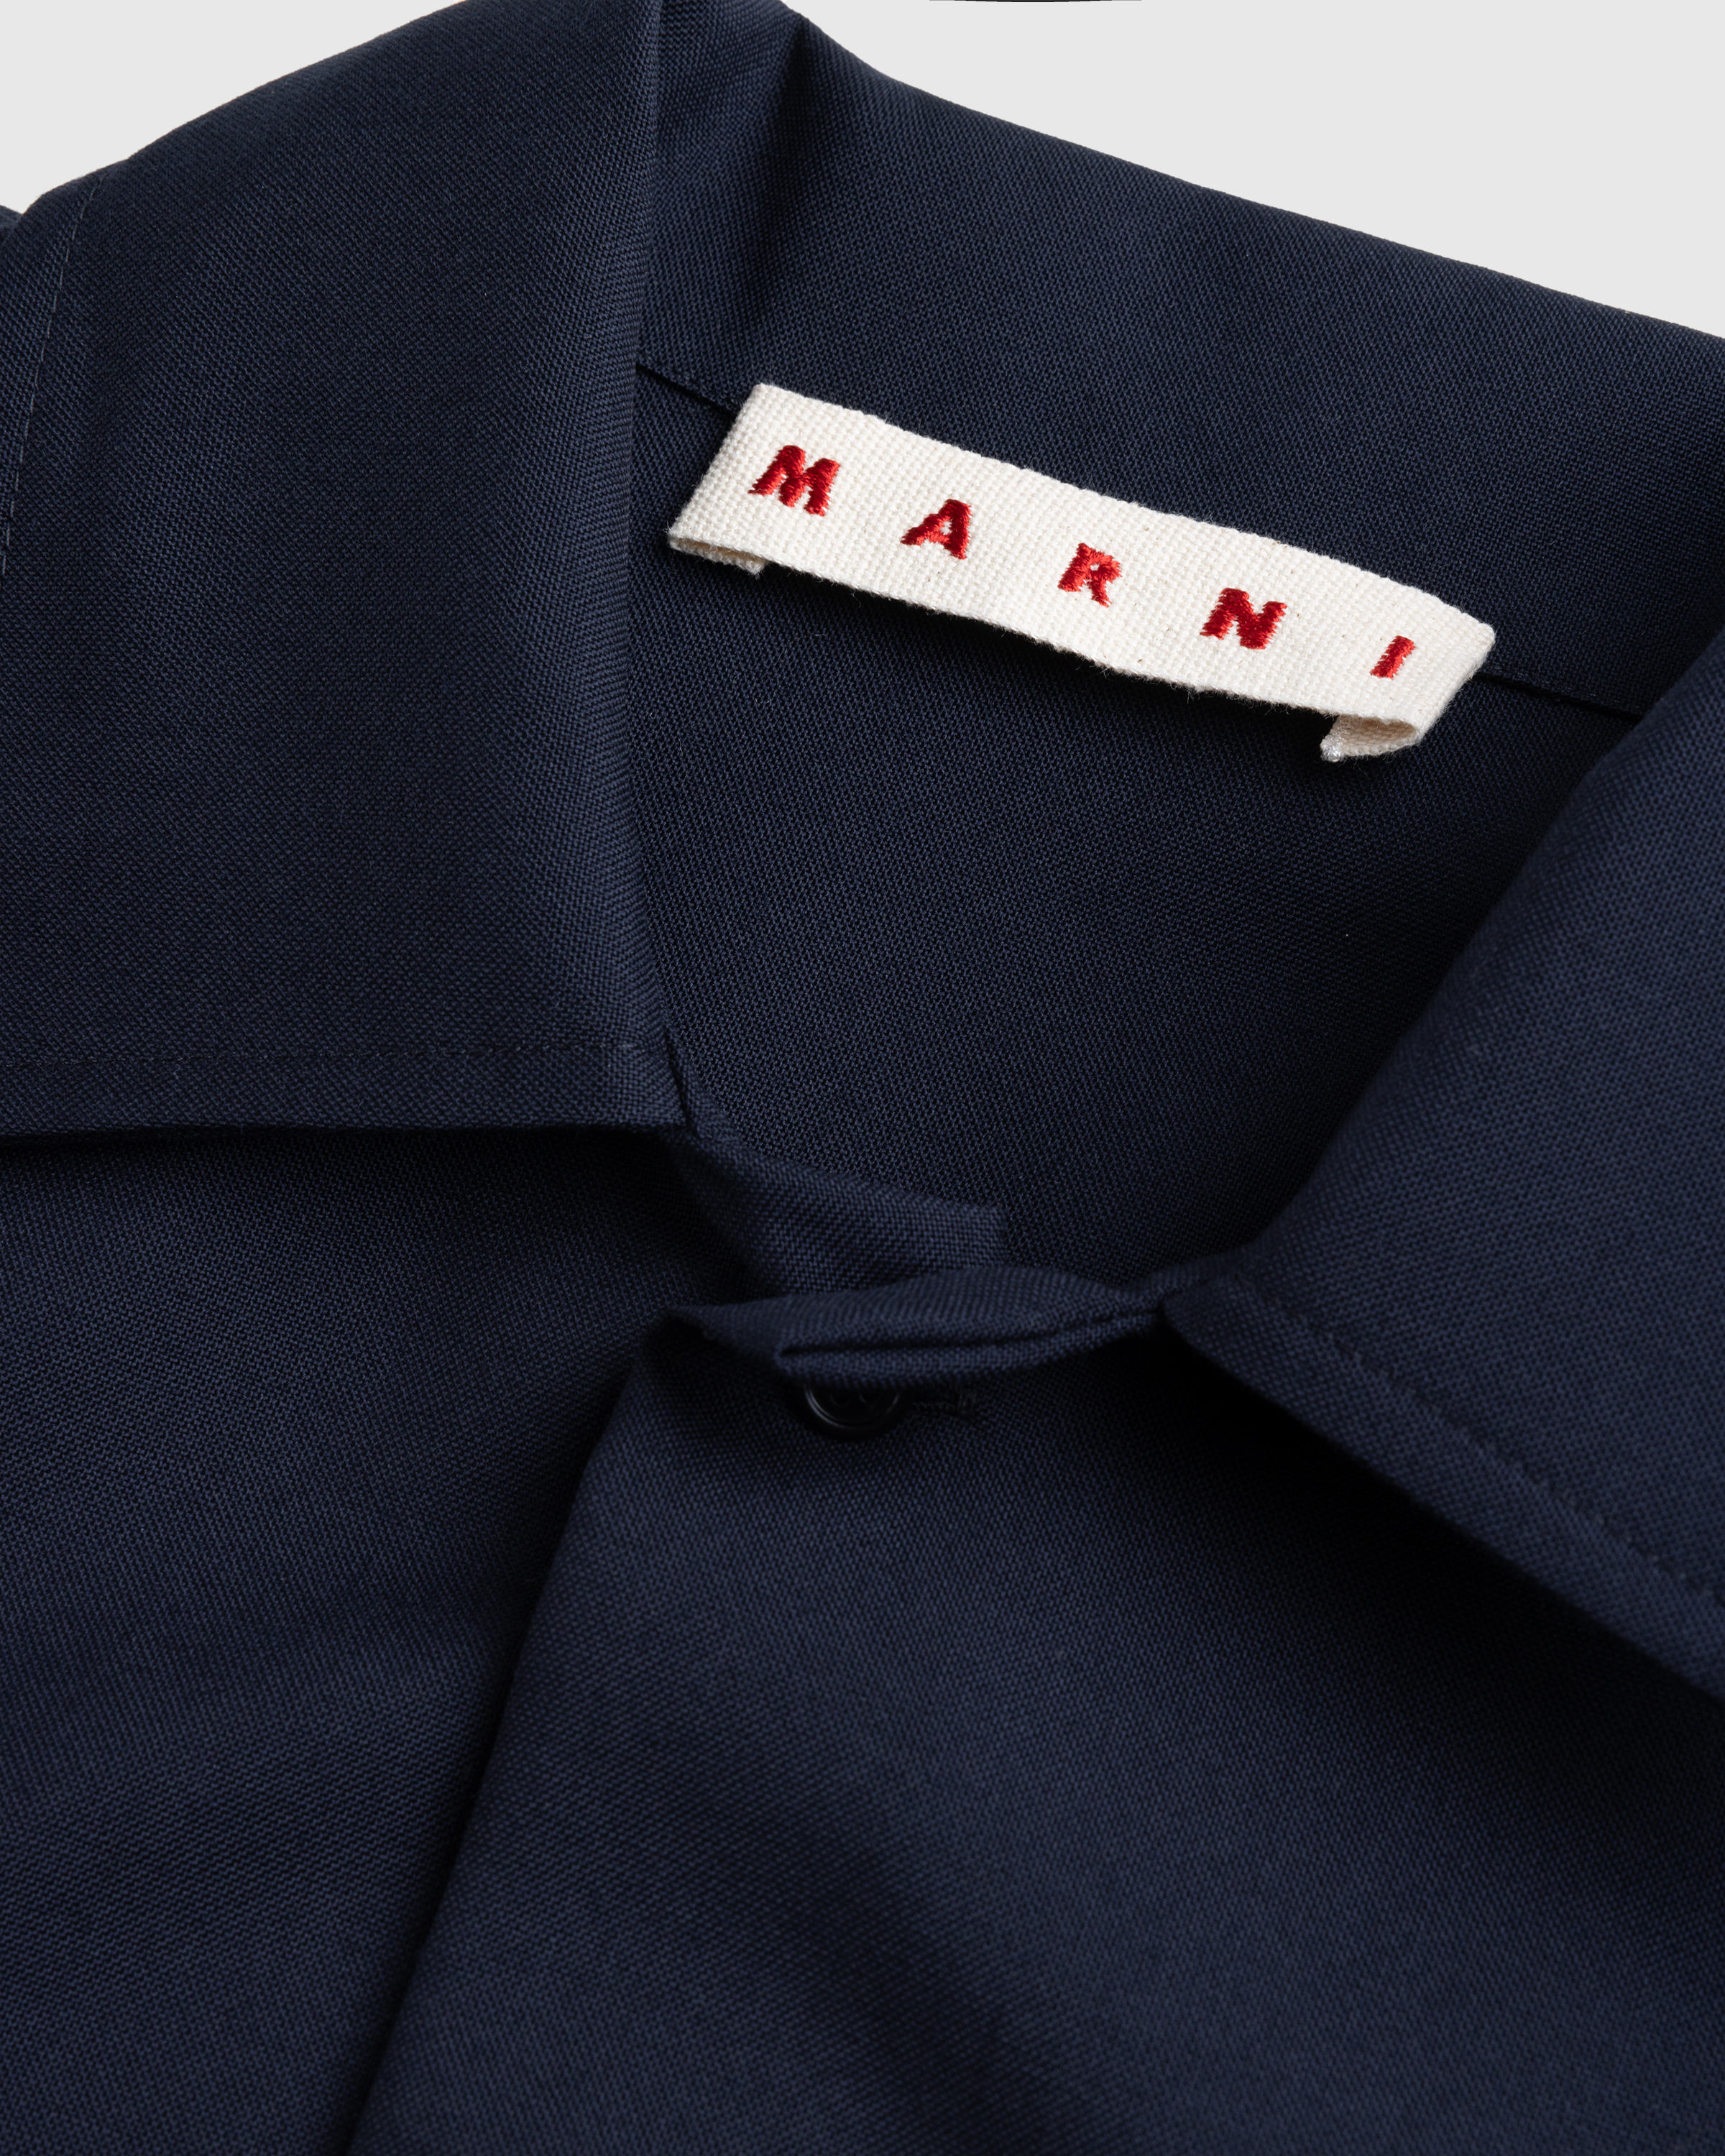 Marni – L/S Virgin Wool Shirt Blue Black - Longsleeve Shirts - Blue - Image 2